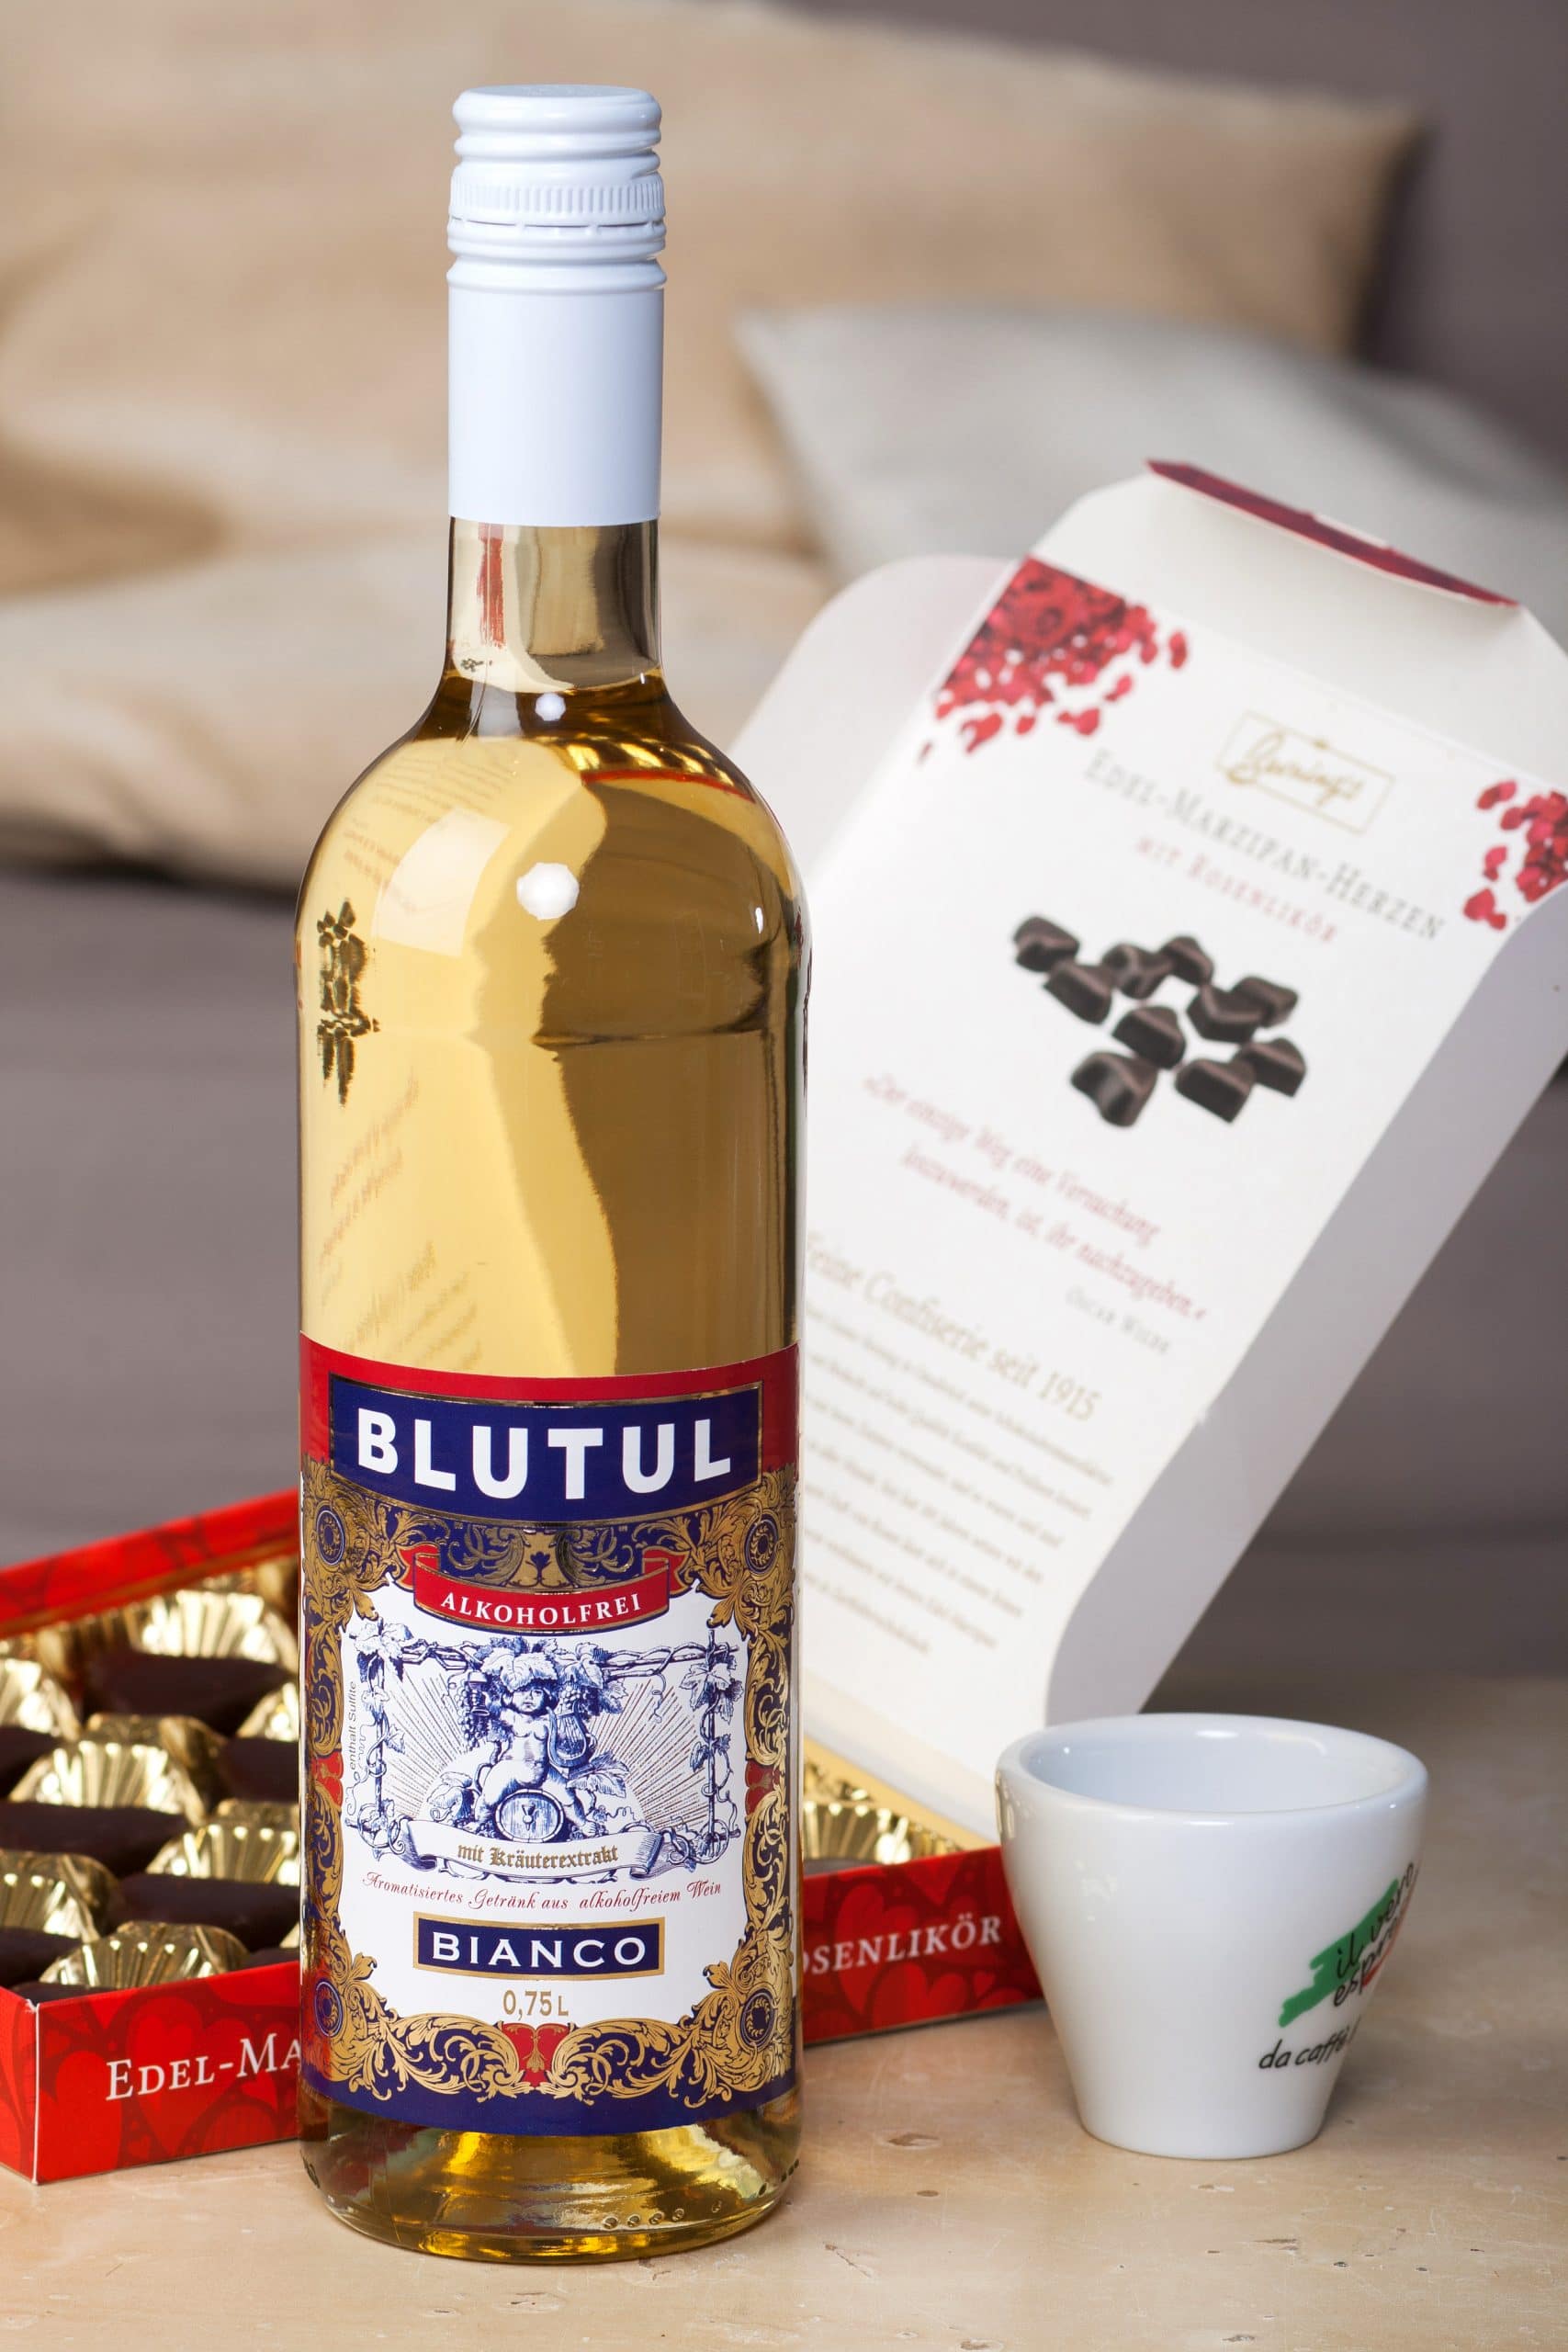 Blutul Bianco vermouth lifestyle